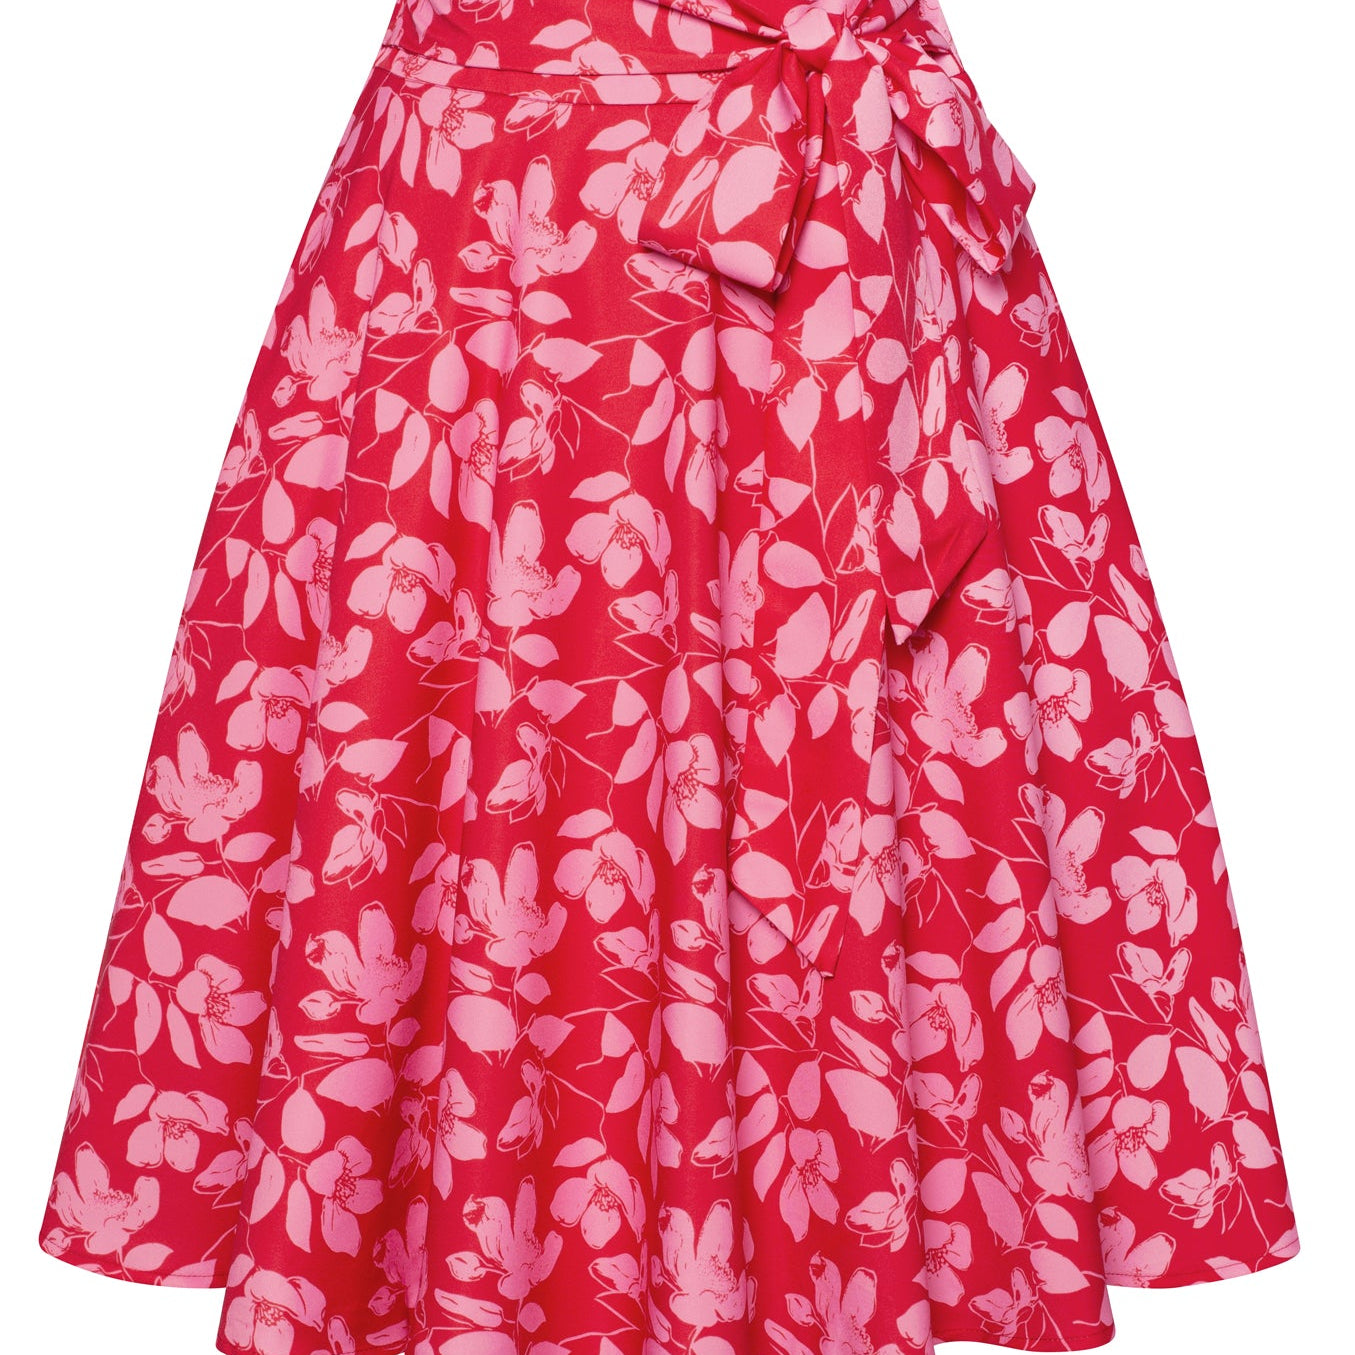 Floral Patterns Vintage High Waist A-Line Pockets Skirt